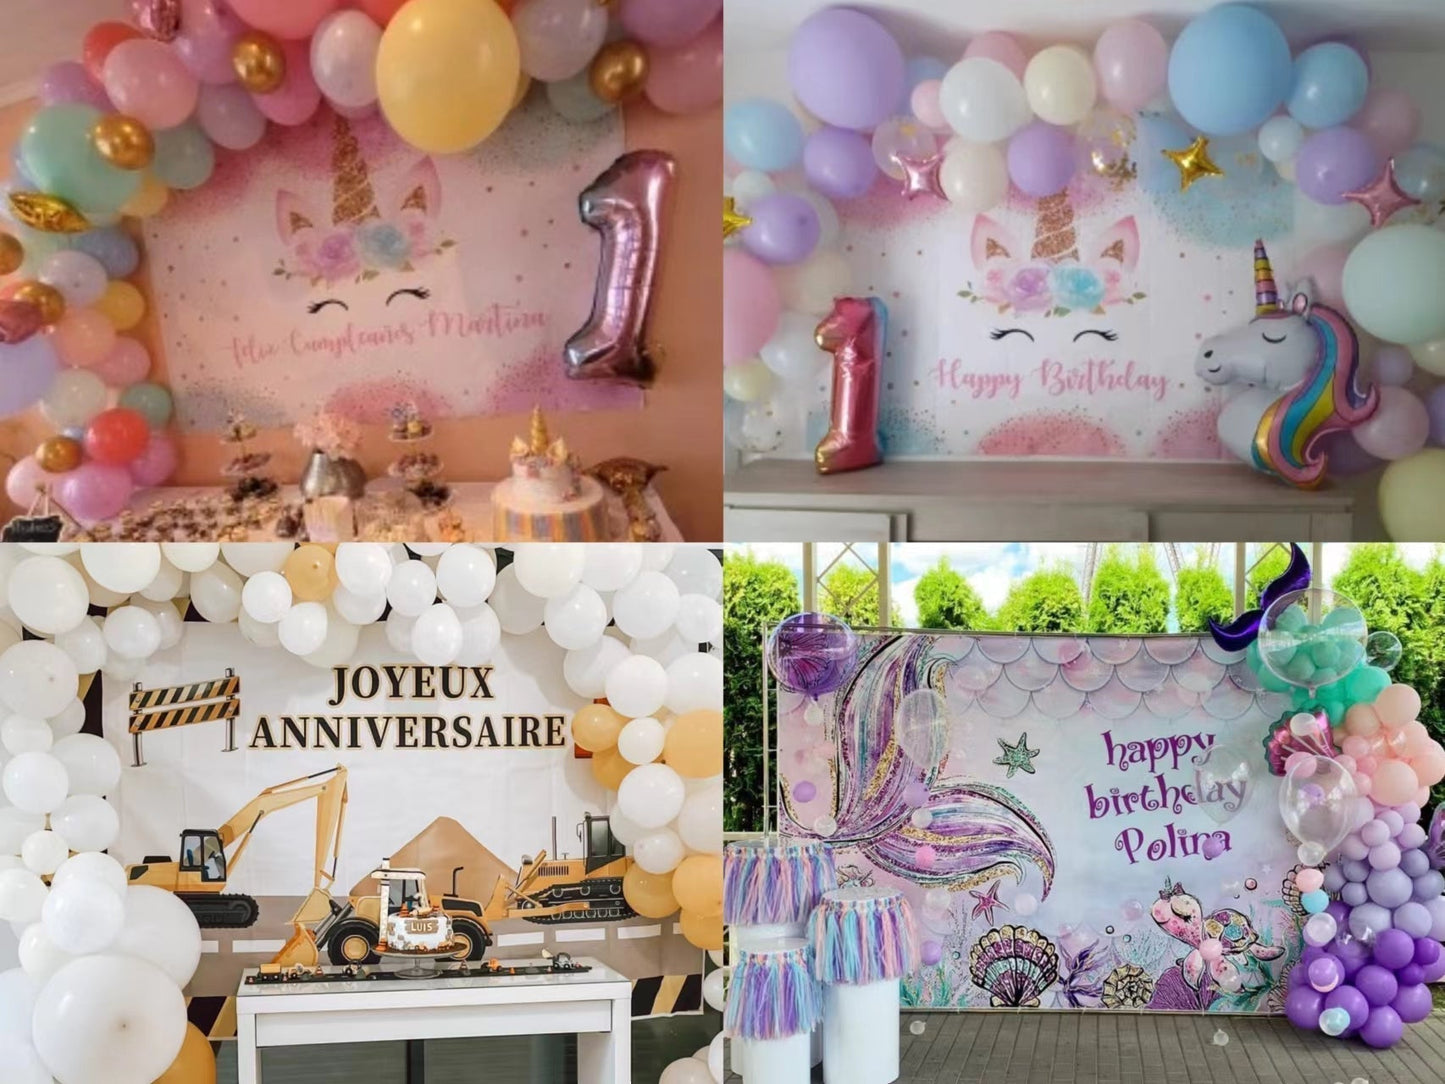 Dinosaur Happy Birthday Party Decoration Backdrop Banner